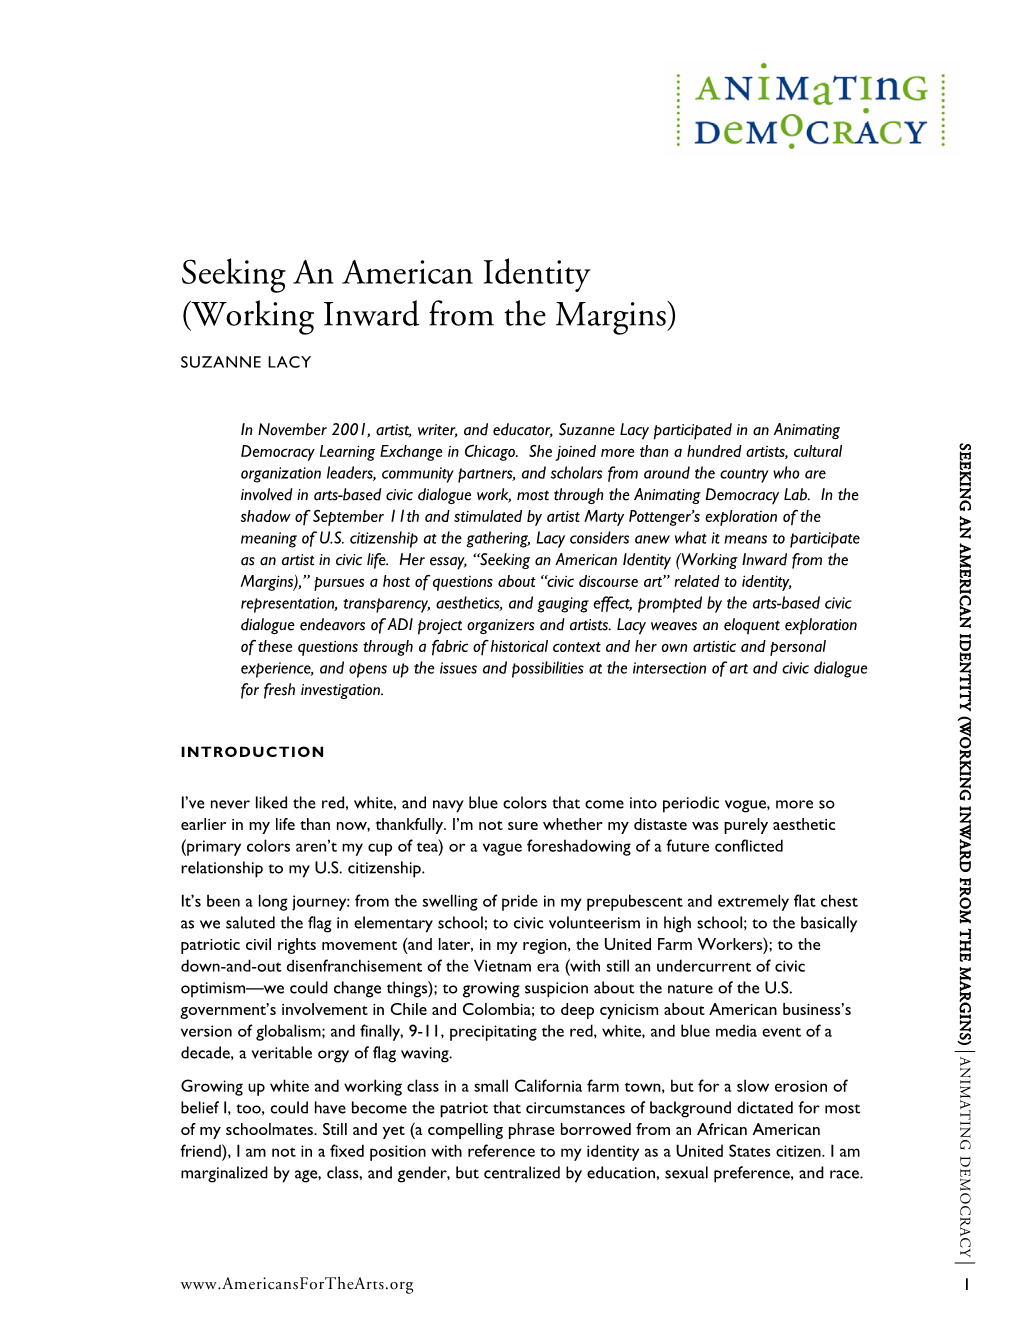 Seeking an American Identity (Working Inward from the Margins)